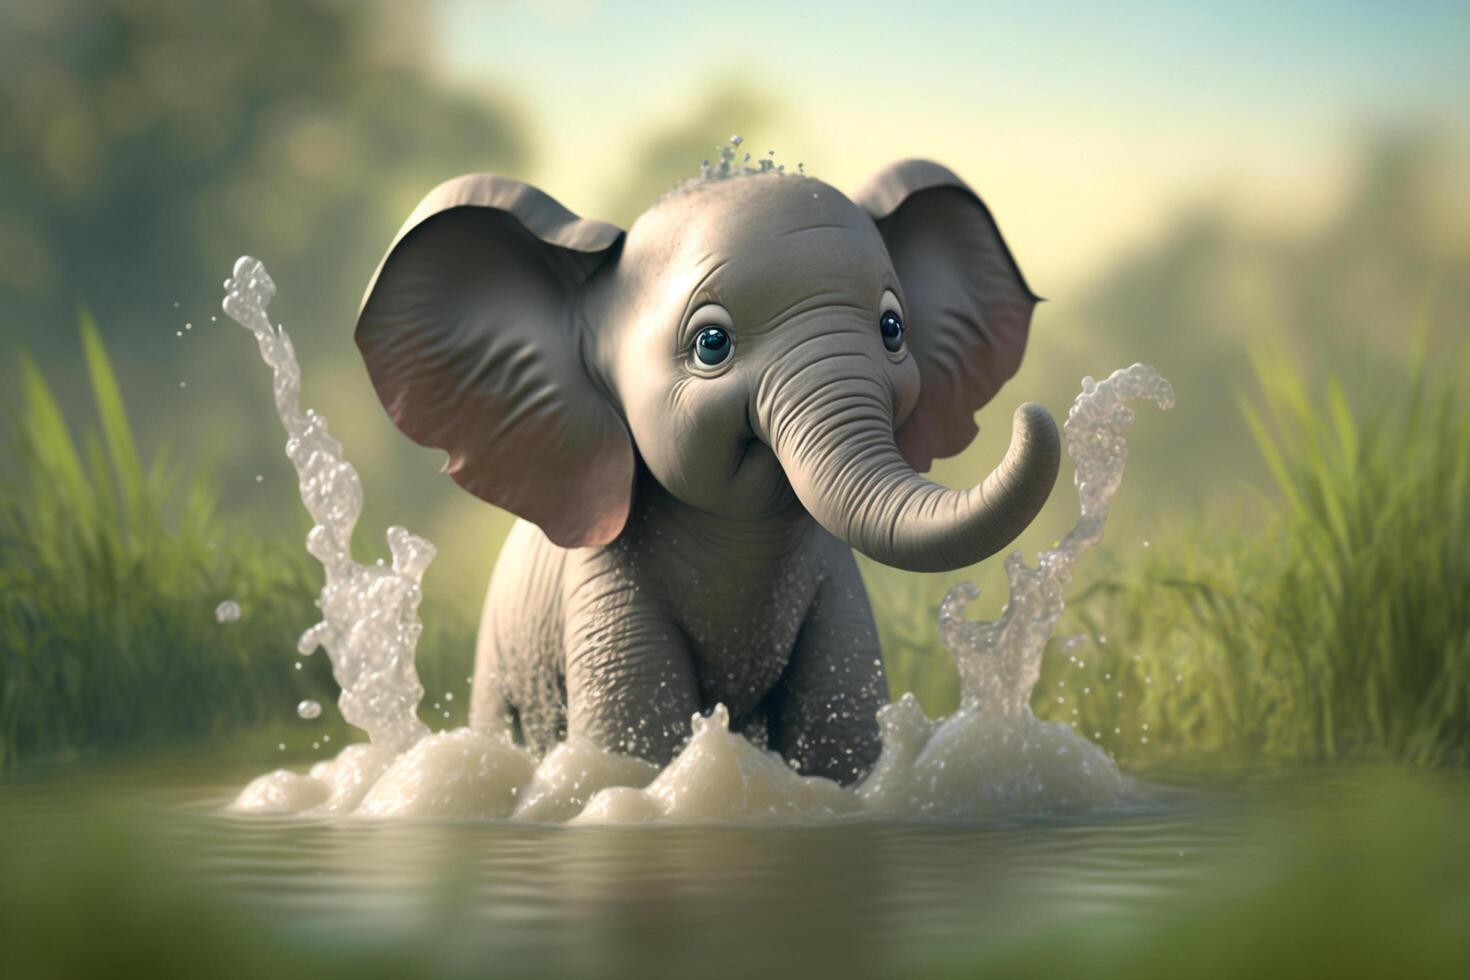 Splish, Splash Adorable Little Elephant Takes a Dip in a Pond photo